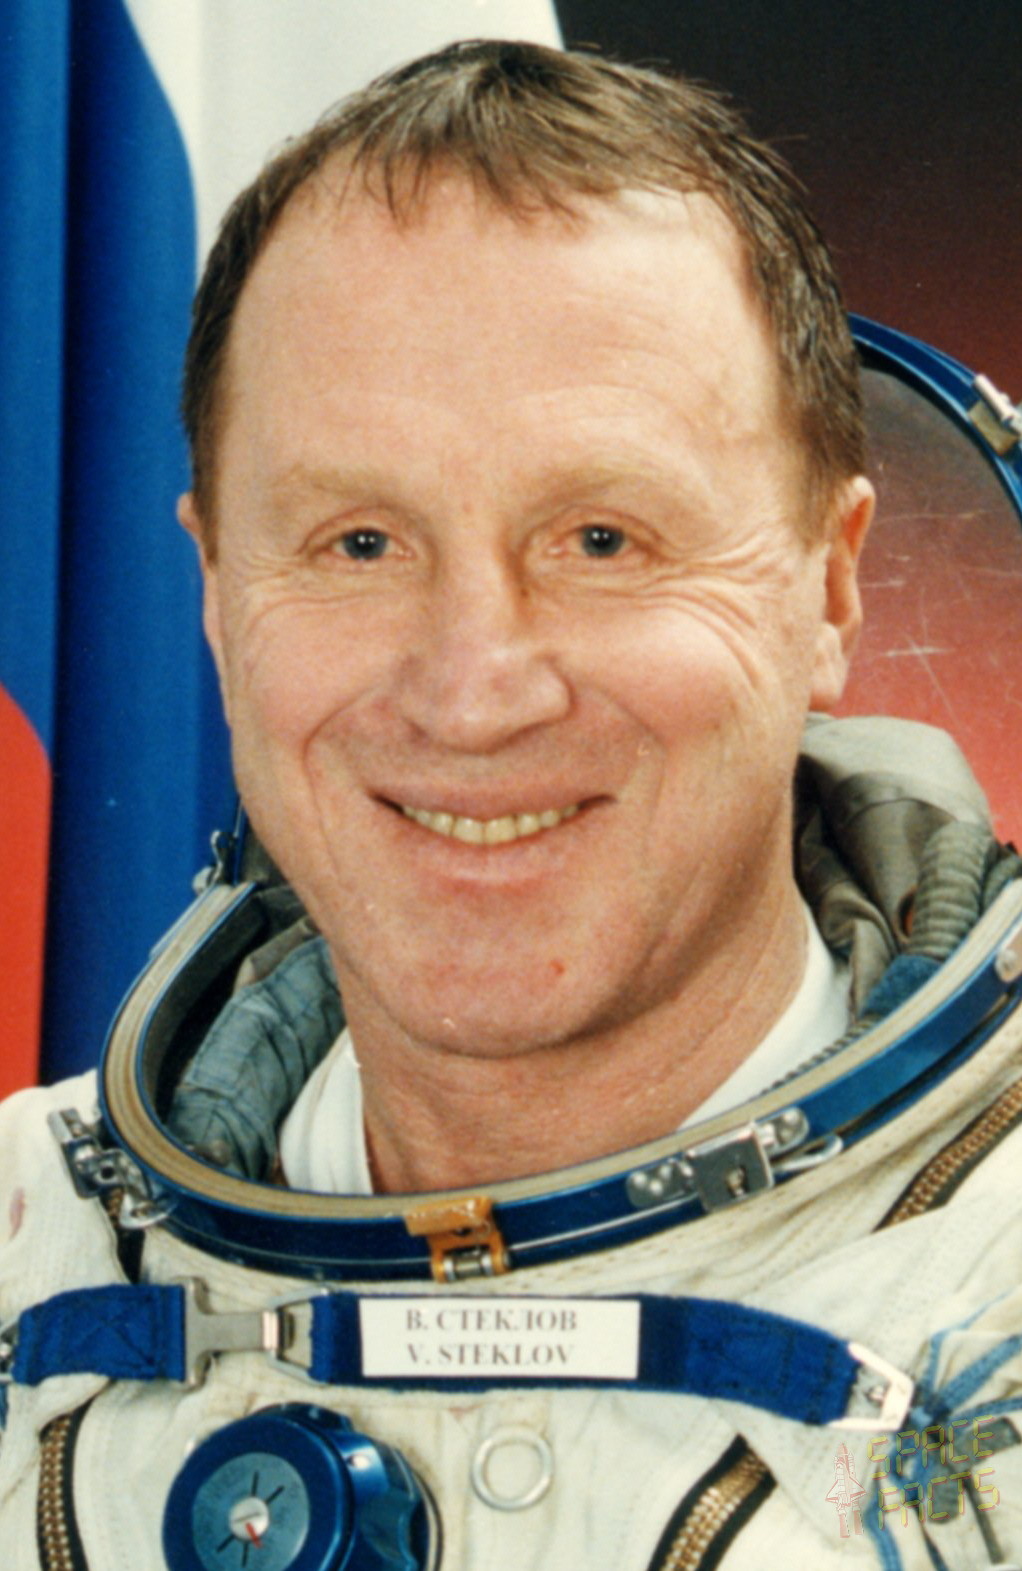 Vladimir Steklov